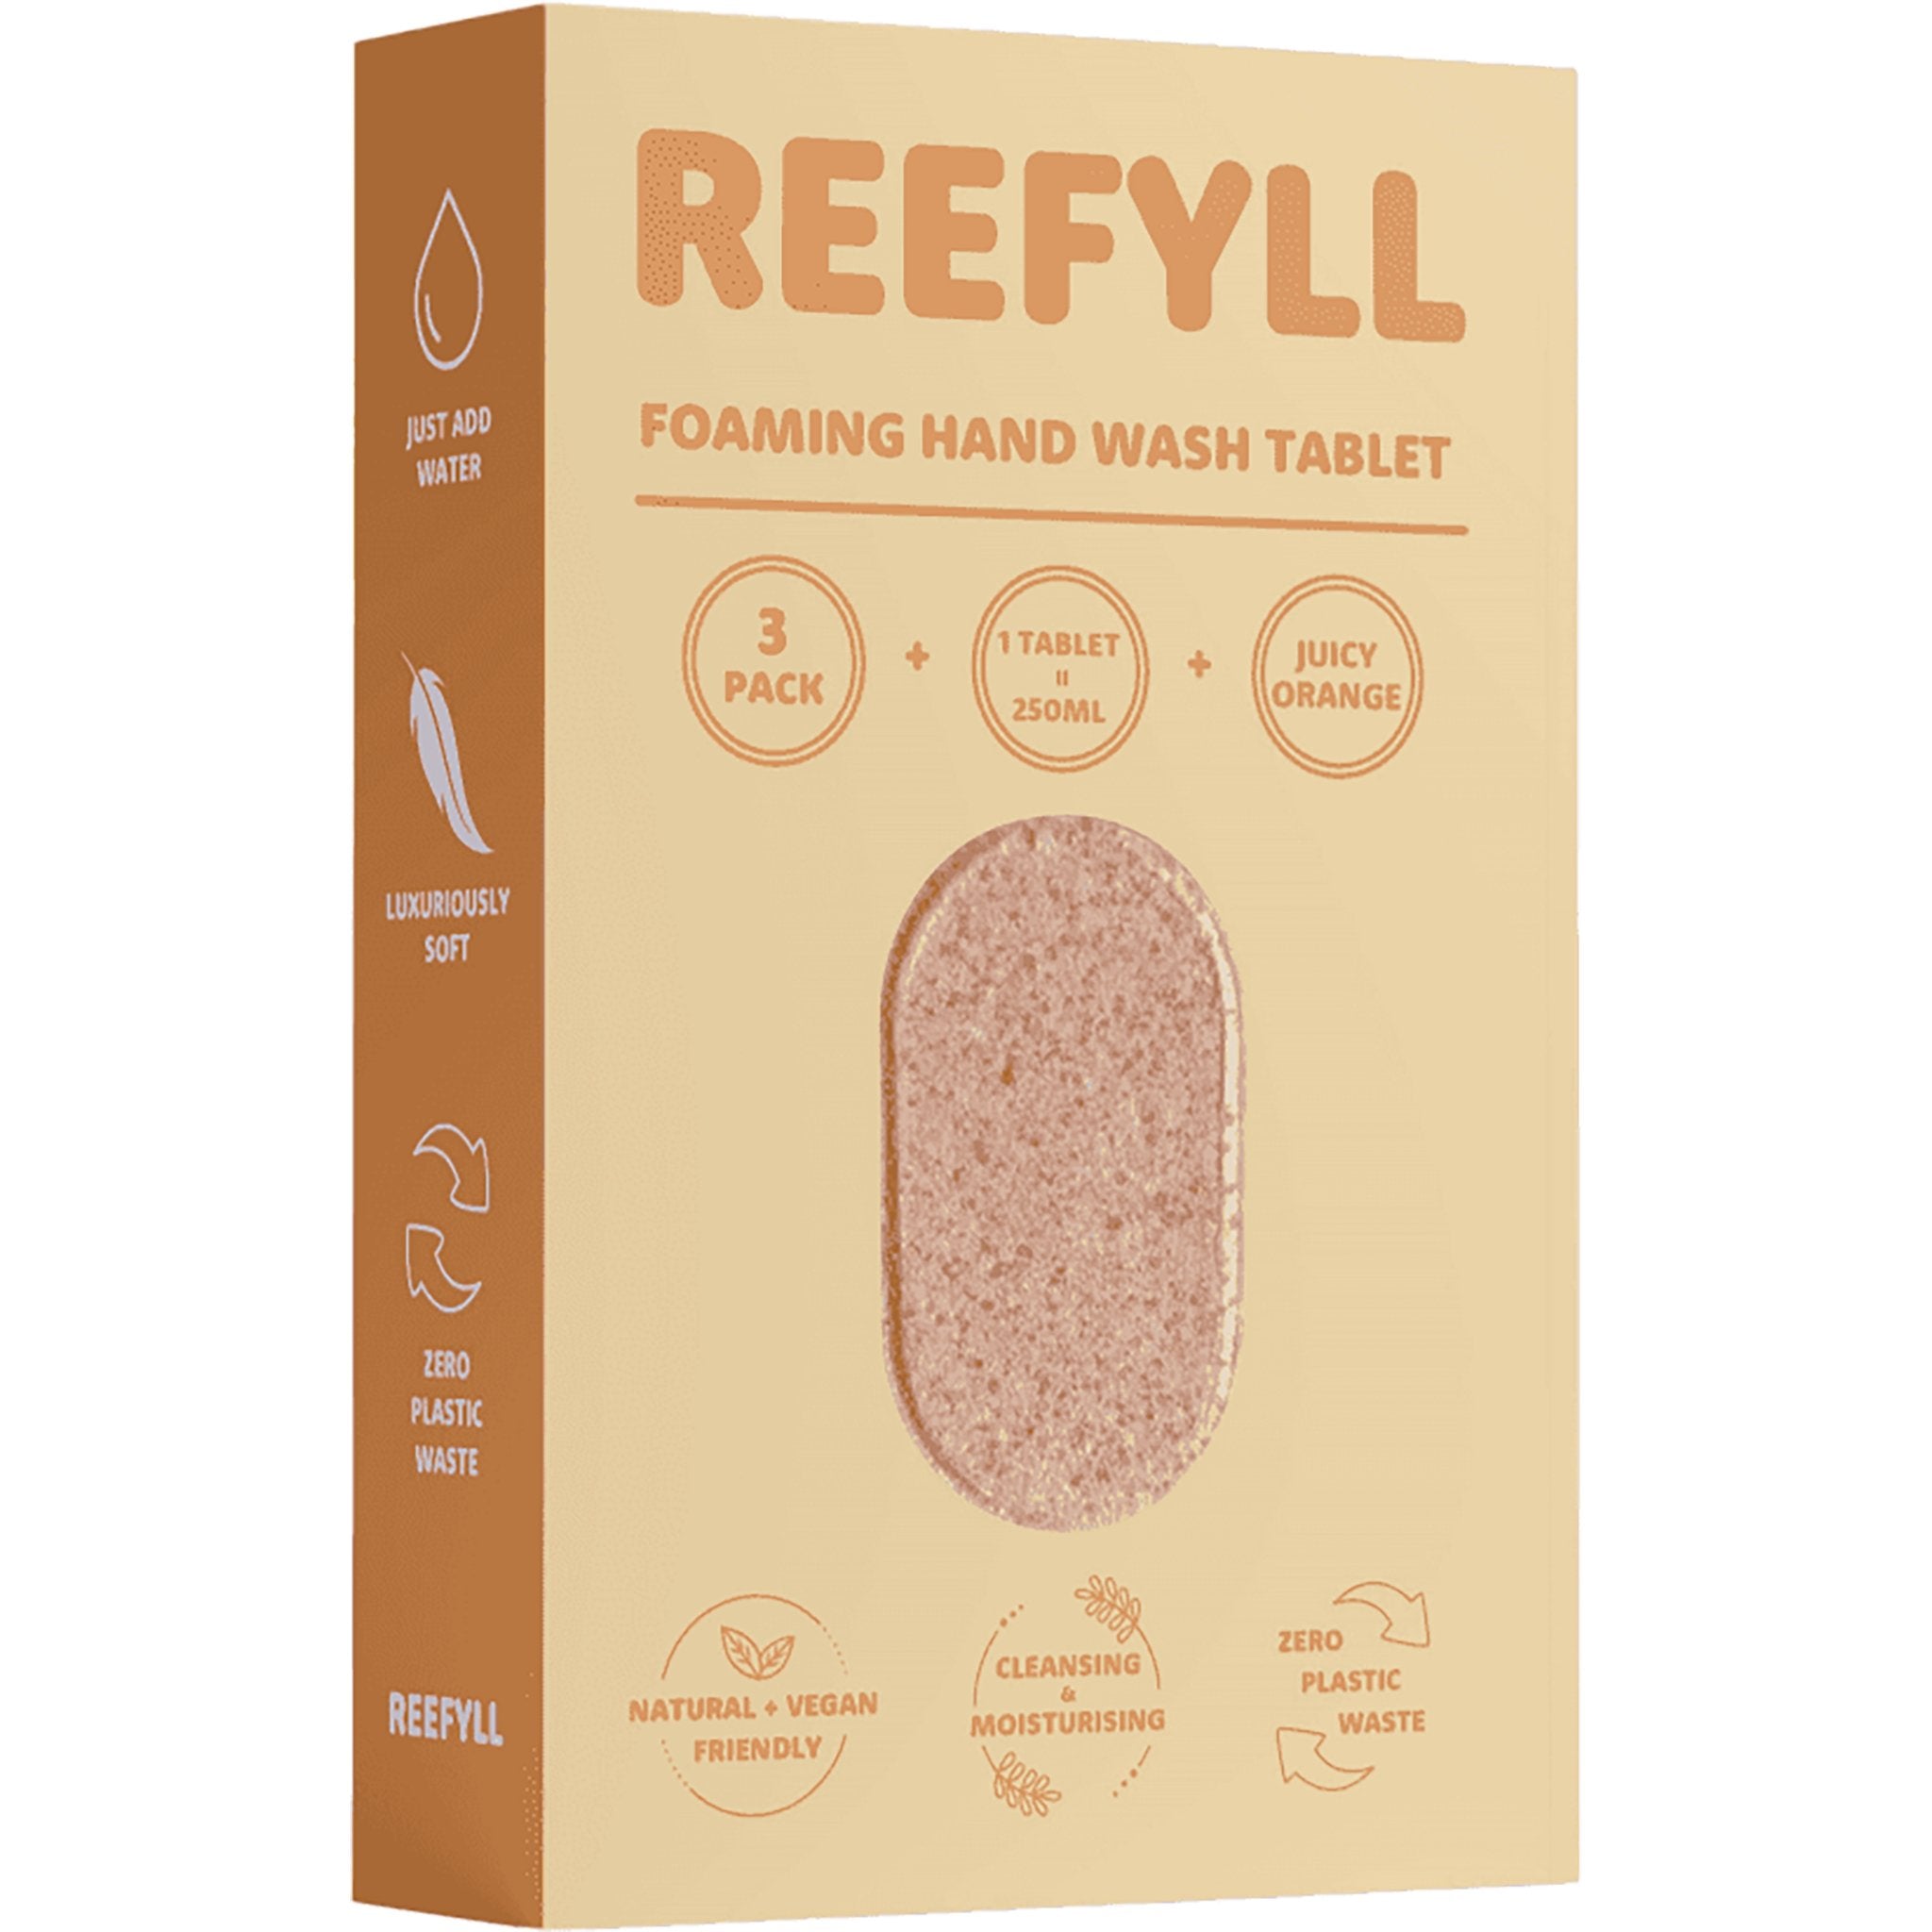 Foaming Hand Soap Refill Tablets - Juicy Orange Scent - mypure.co.uk